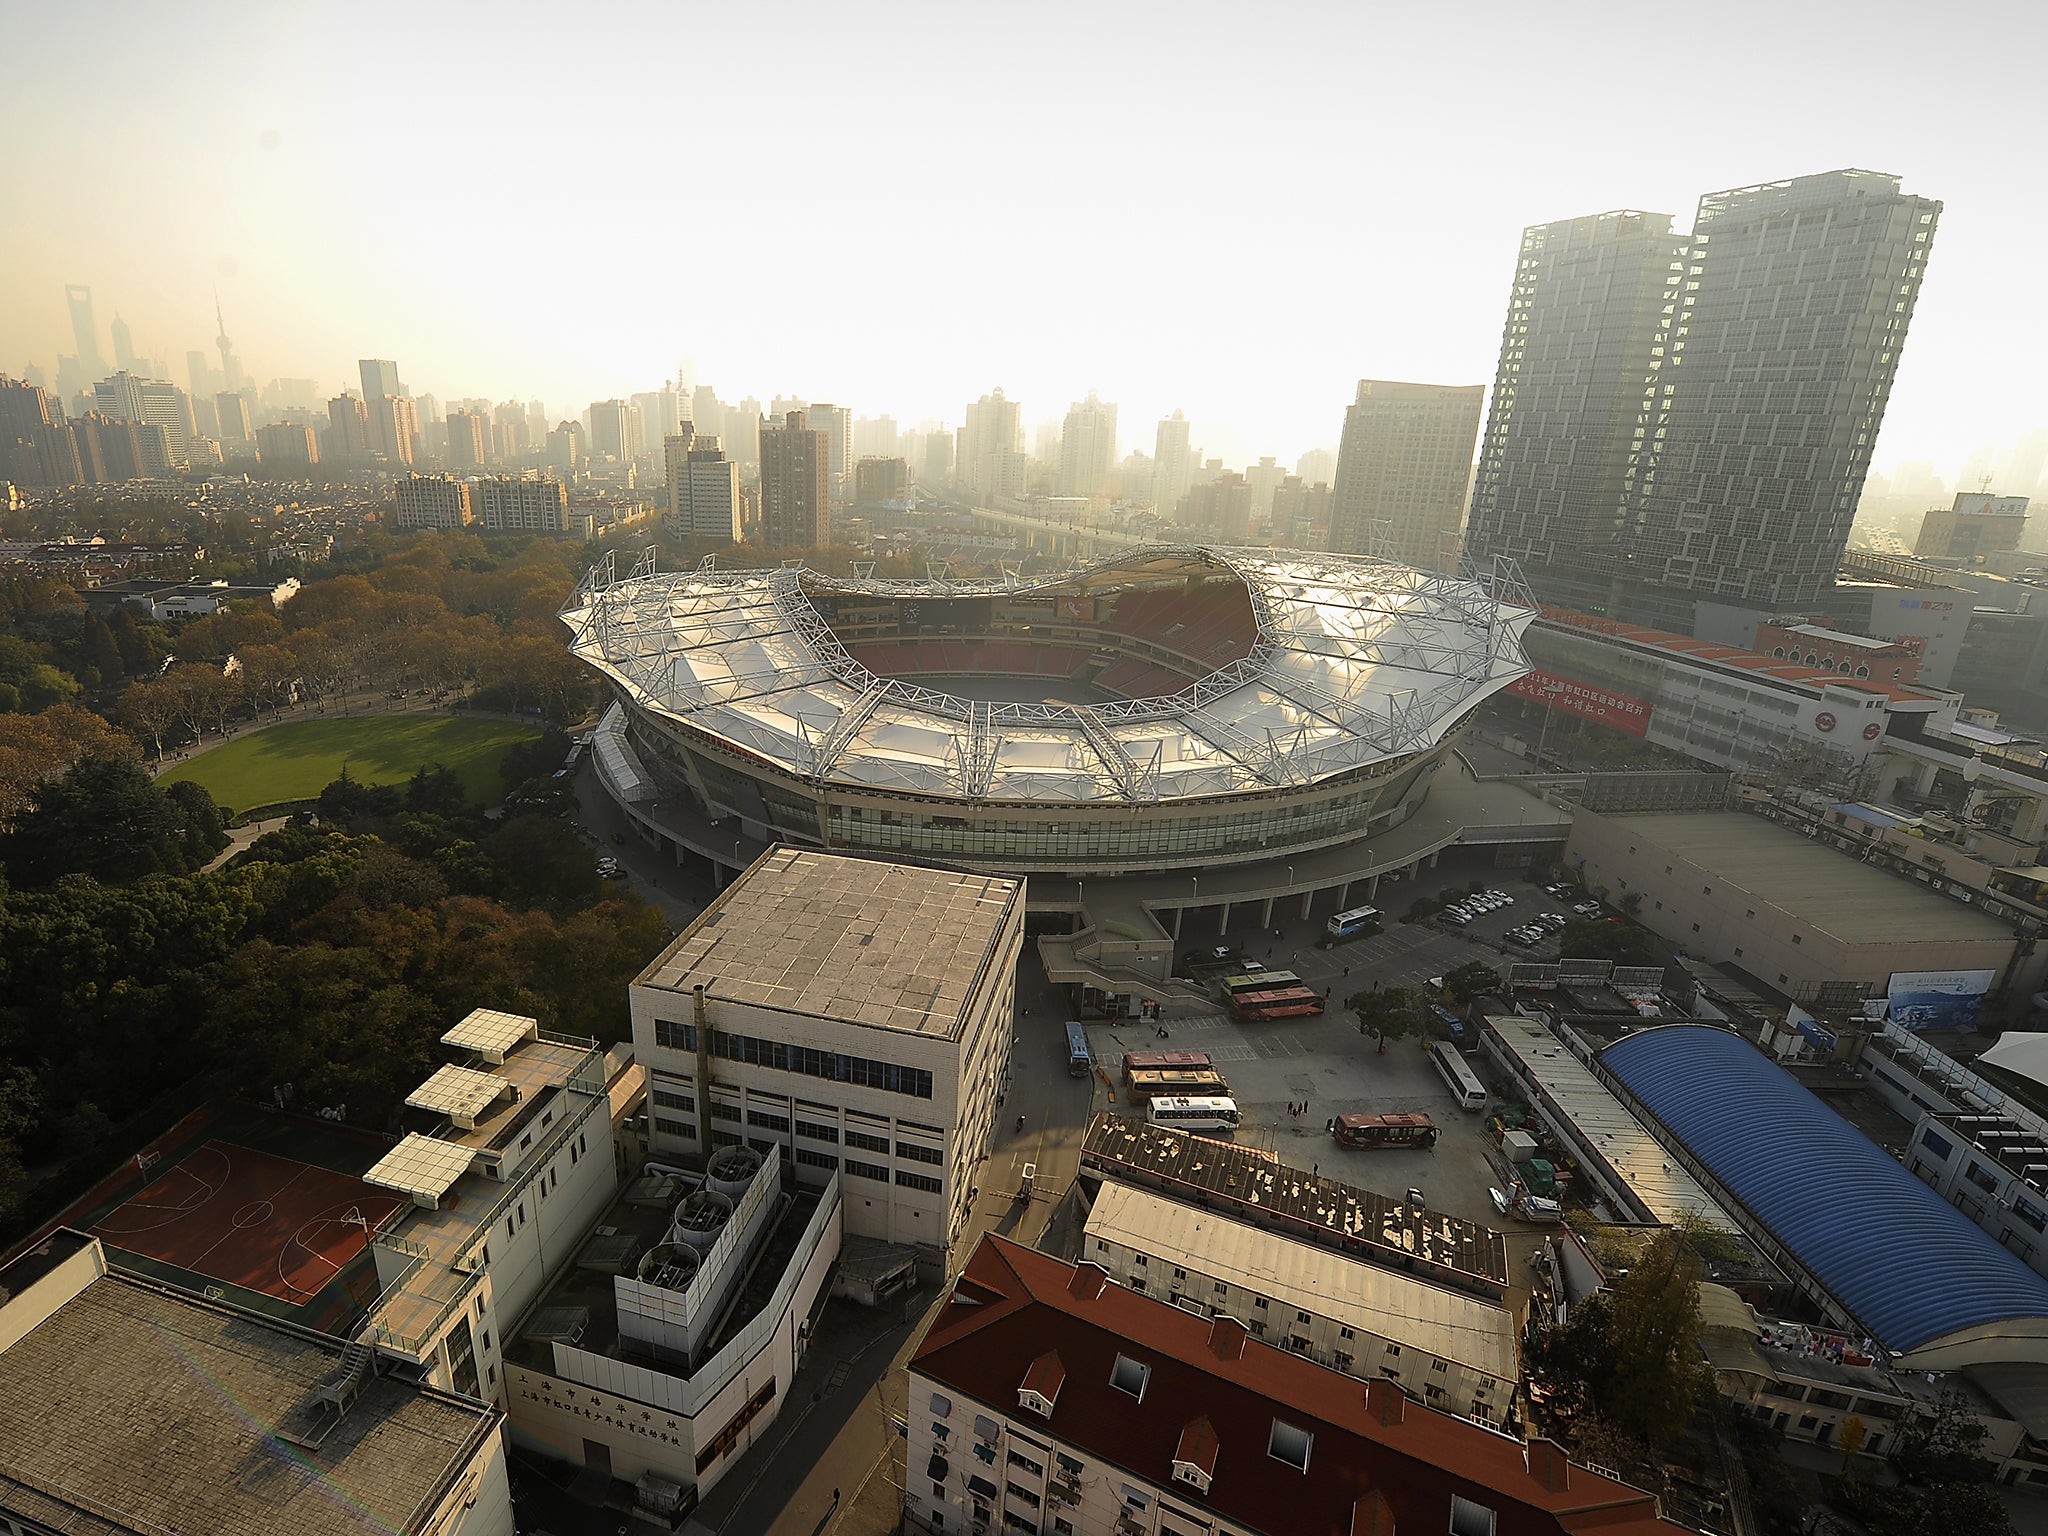 A view of the Hongkou Stadium where Shanghai Shenhua Football Club